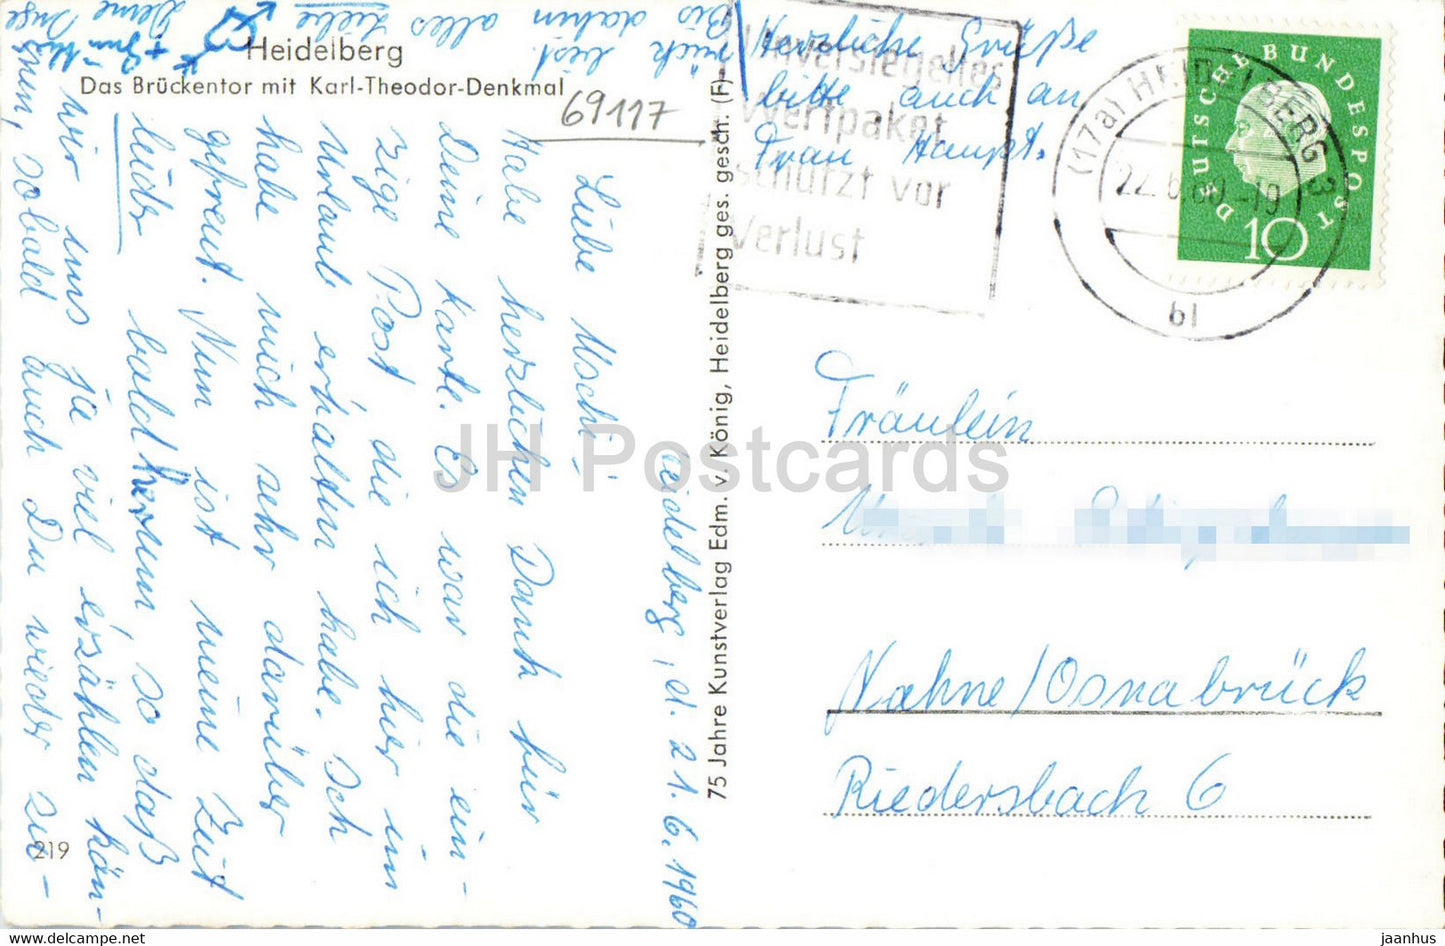 Heidelberg - Das Bruckentor mit Karl Theodor Denkmal - monument - old postcard - 1960 - Germany - used